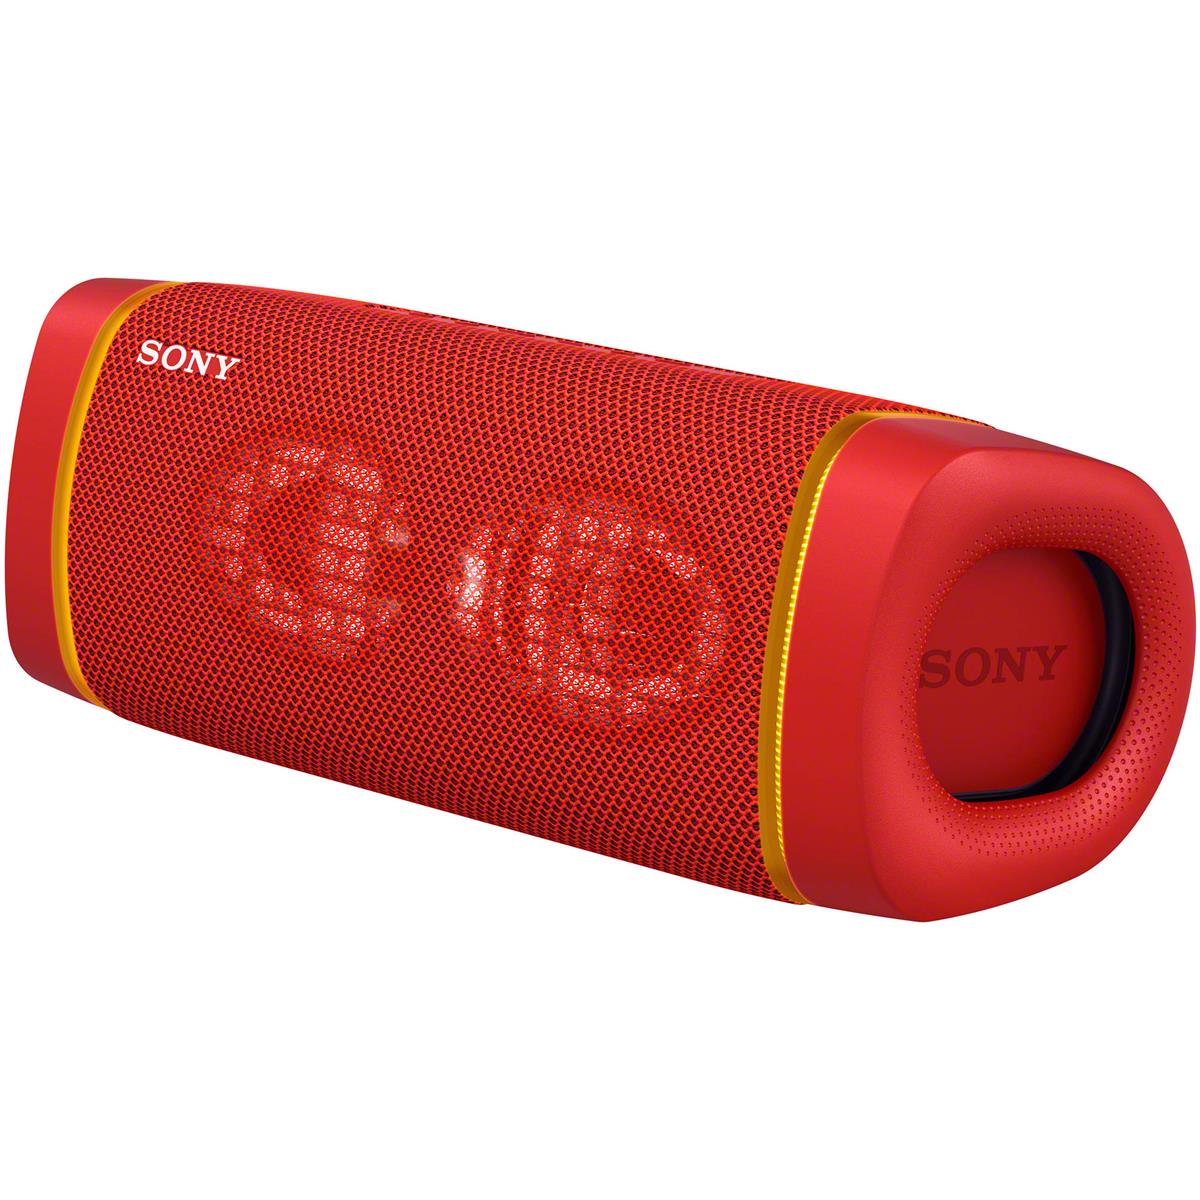 Sony XB33 EXTRA BASS Portable Bluetooth Speaker, Red -  SRSXB33/R